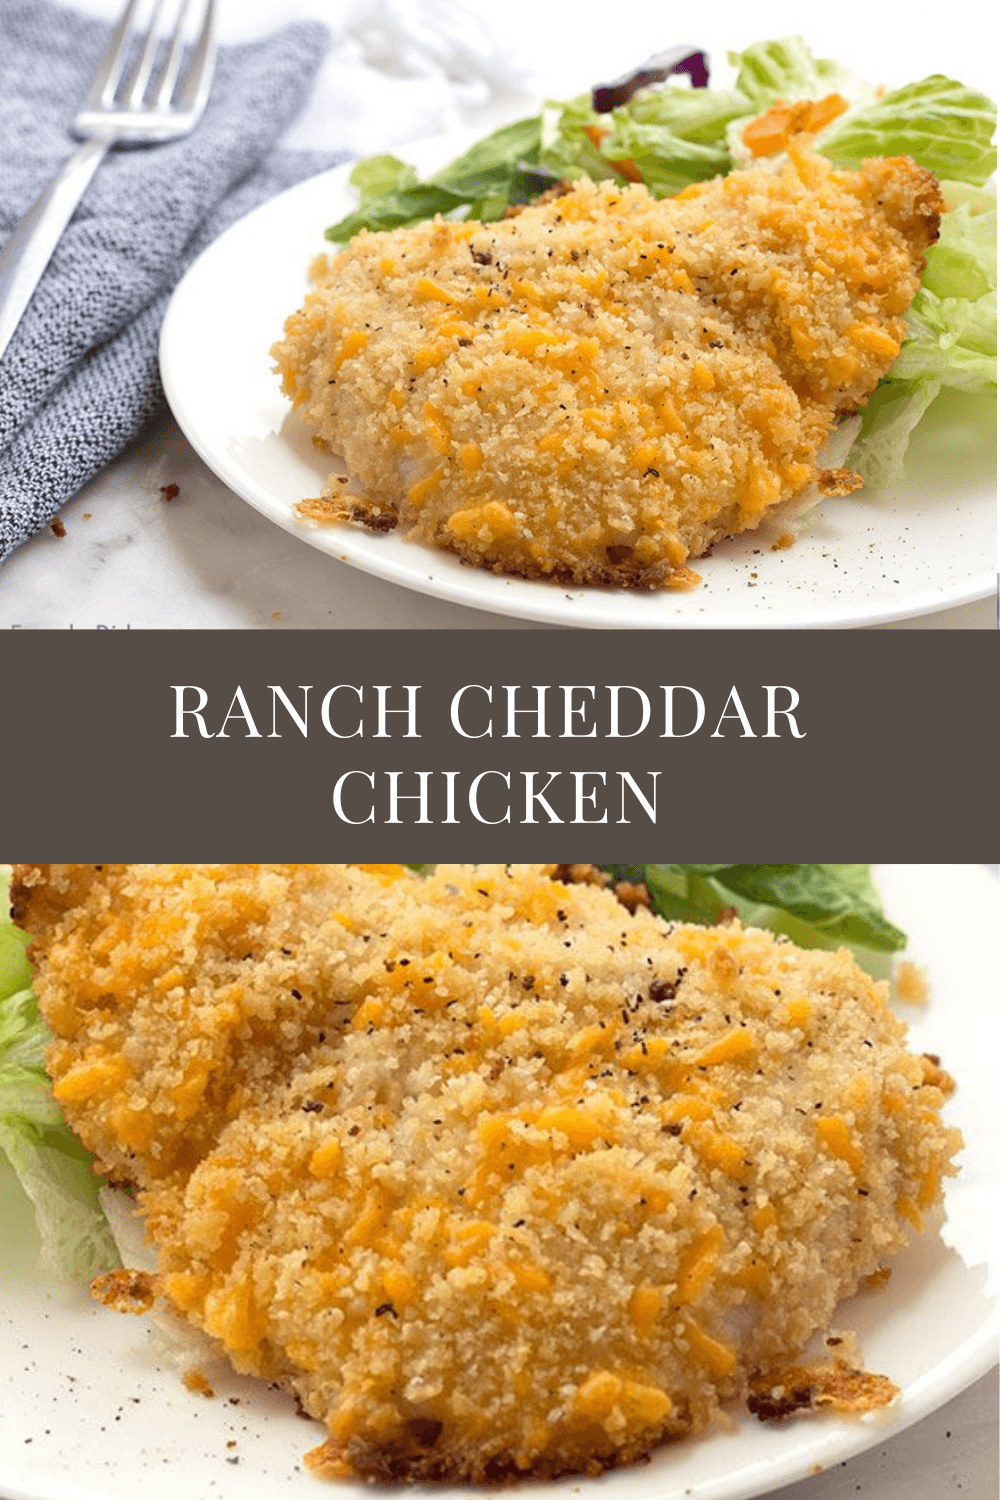 Ranch Cheddar Chicken Recipe